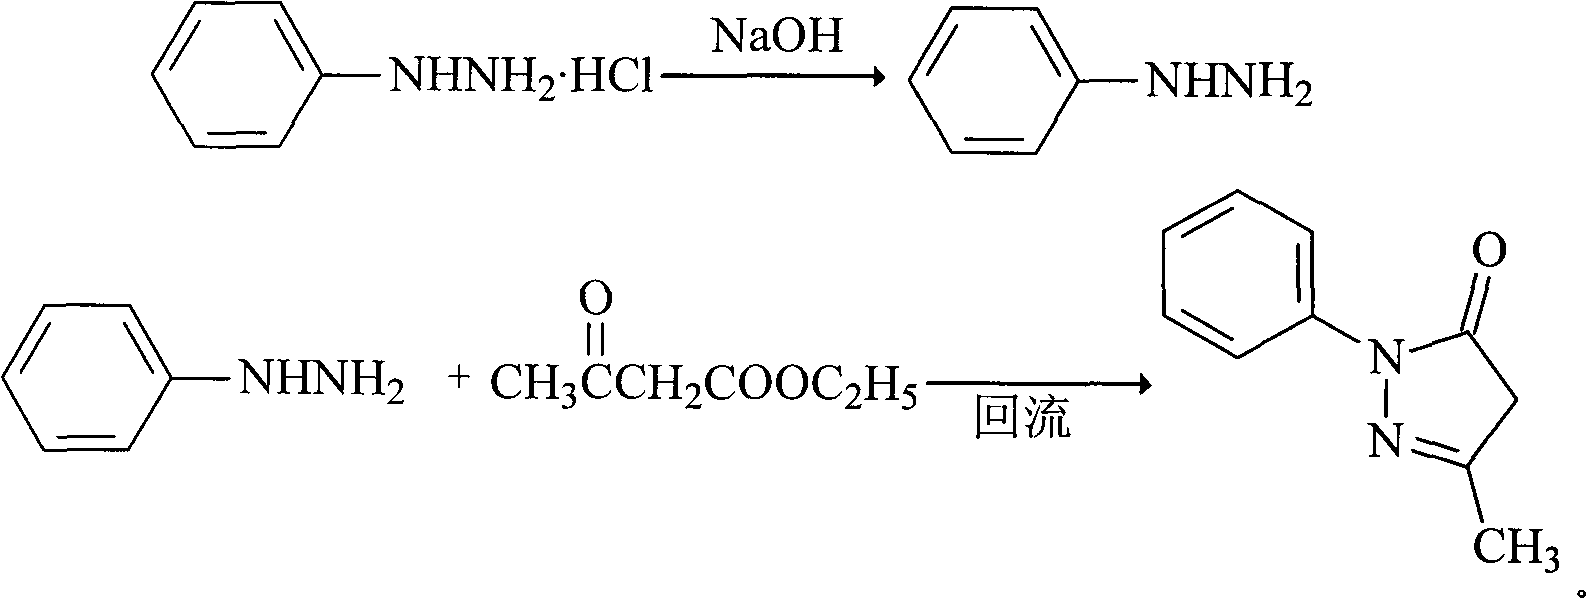 Edaravone compound synthesized by new method